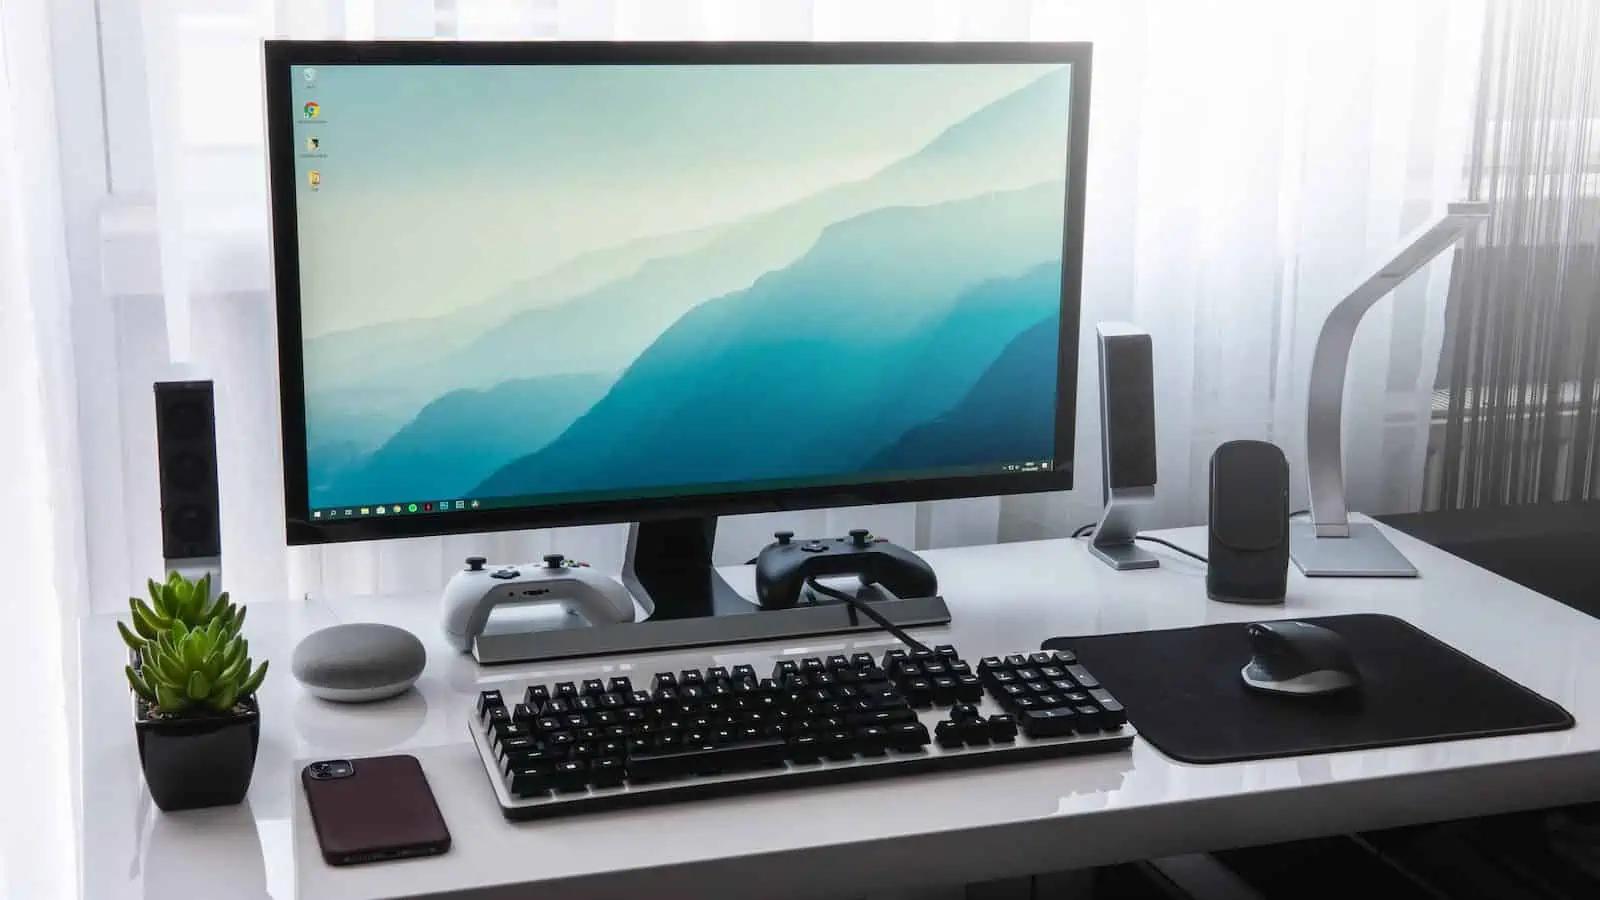 black computer keyboard beside silver imac